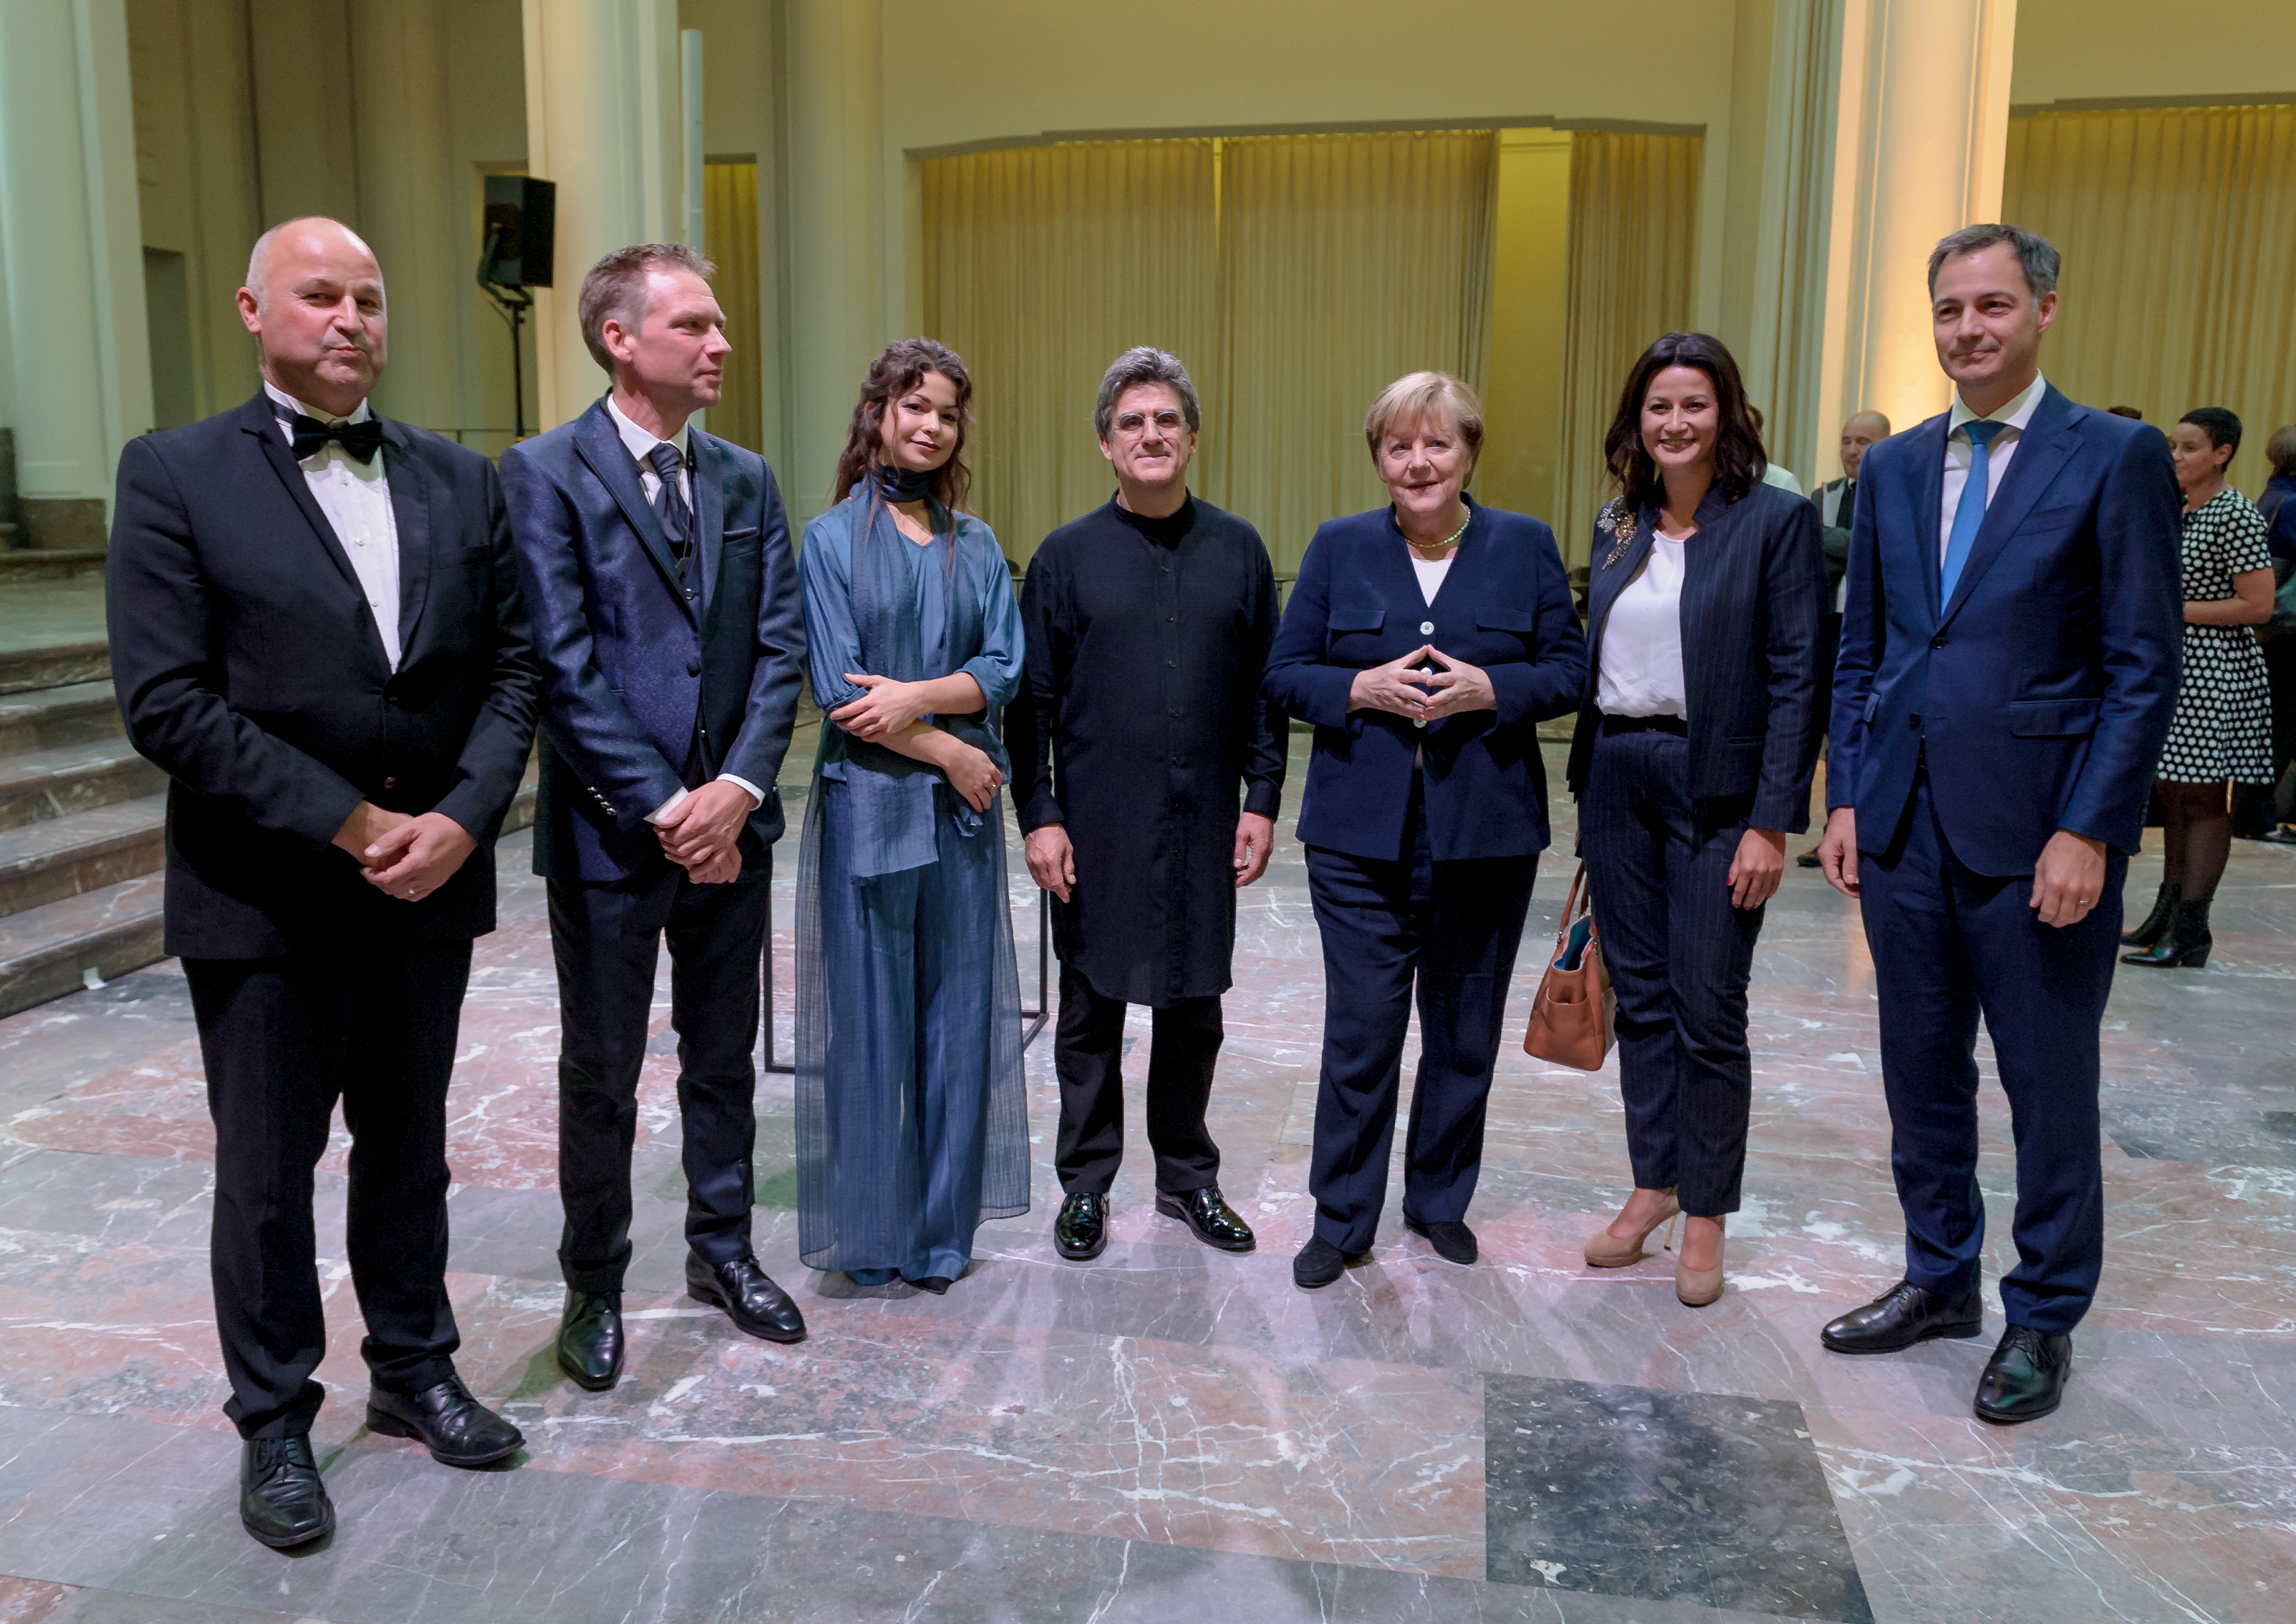 Gala 2021 with Angela Merkel and the Belgian Prime Minister Alexander de Croo.